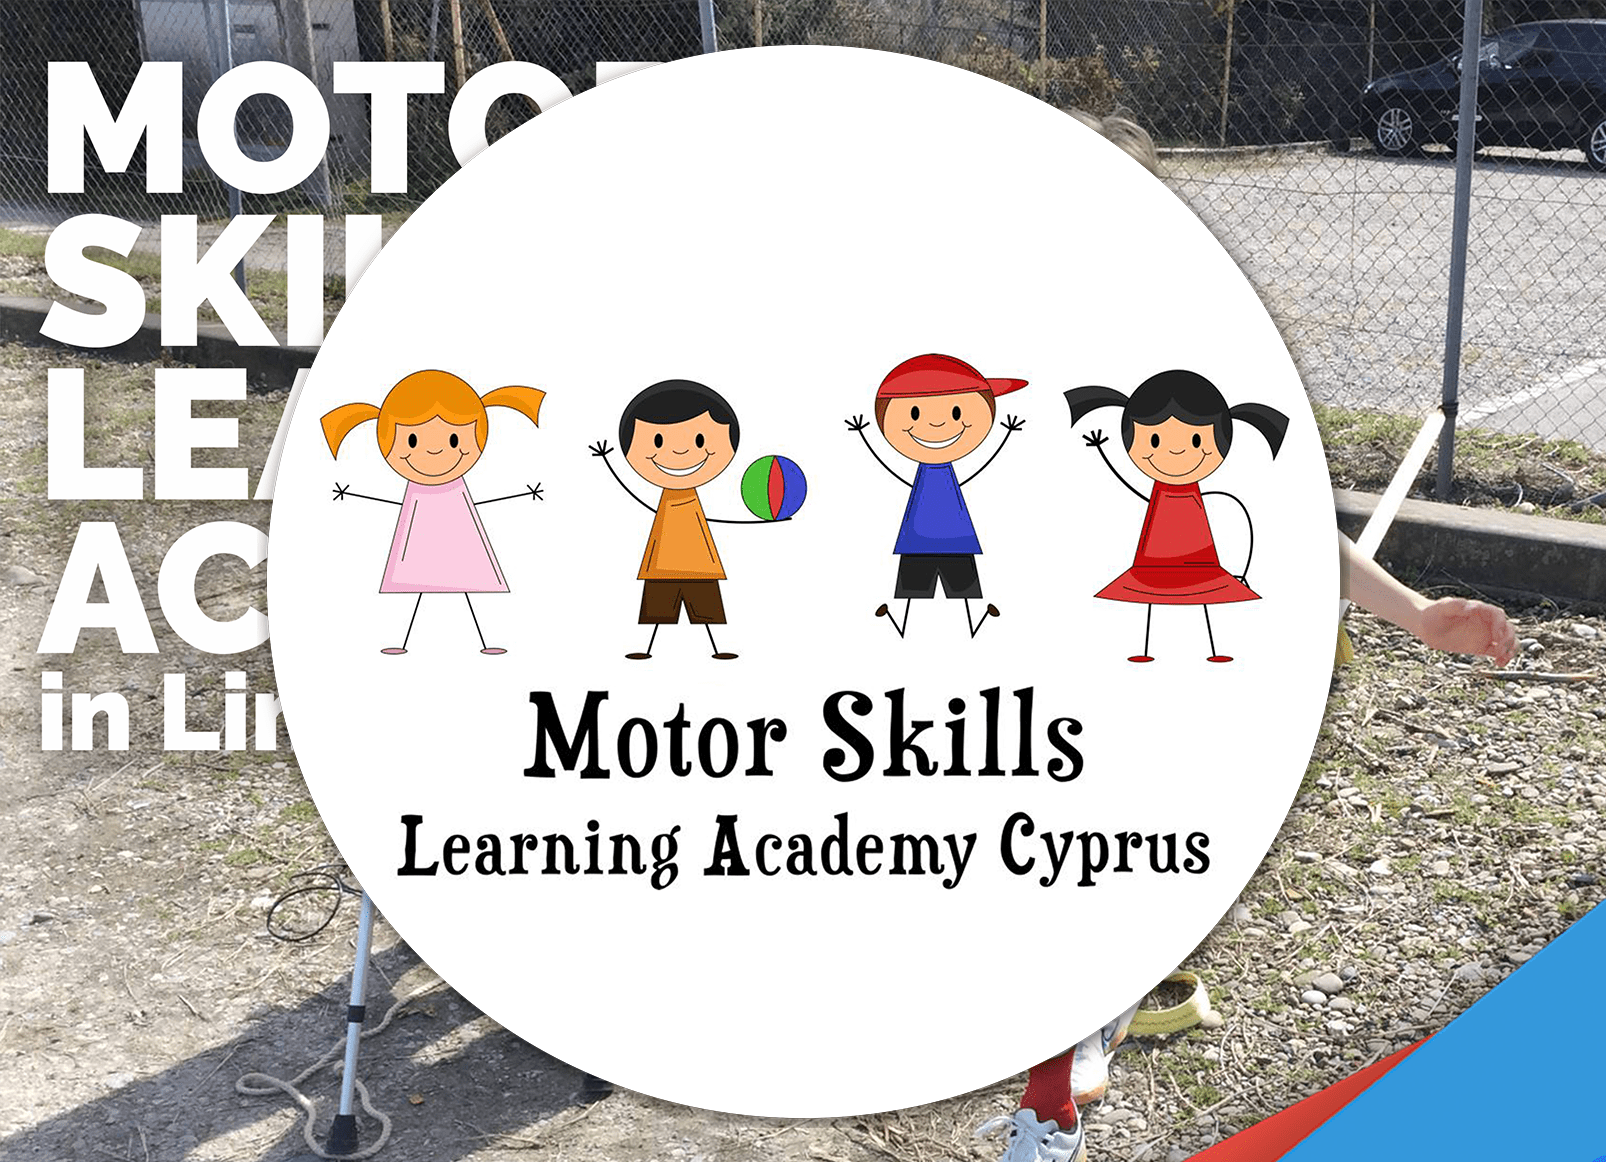 Motor Skills Learning Academy Cyprus